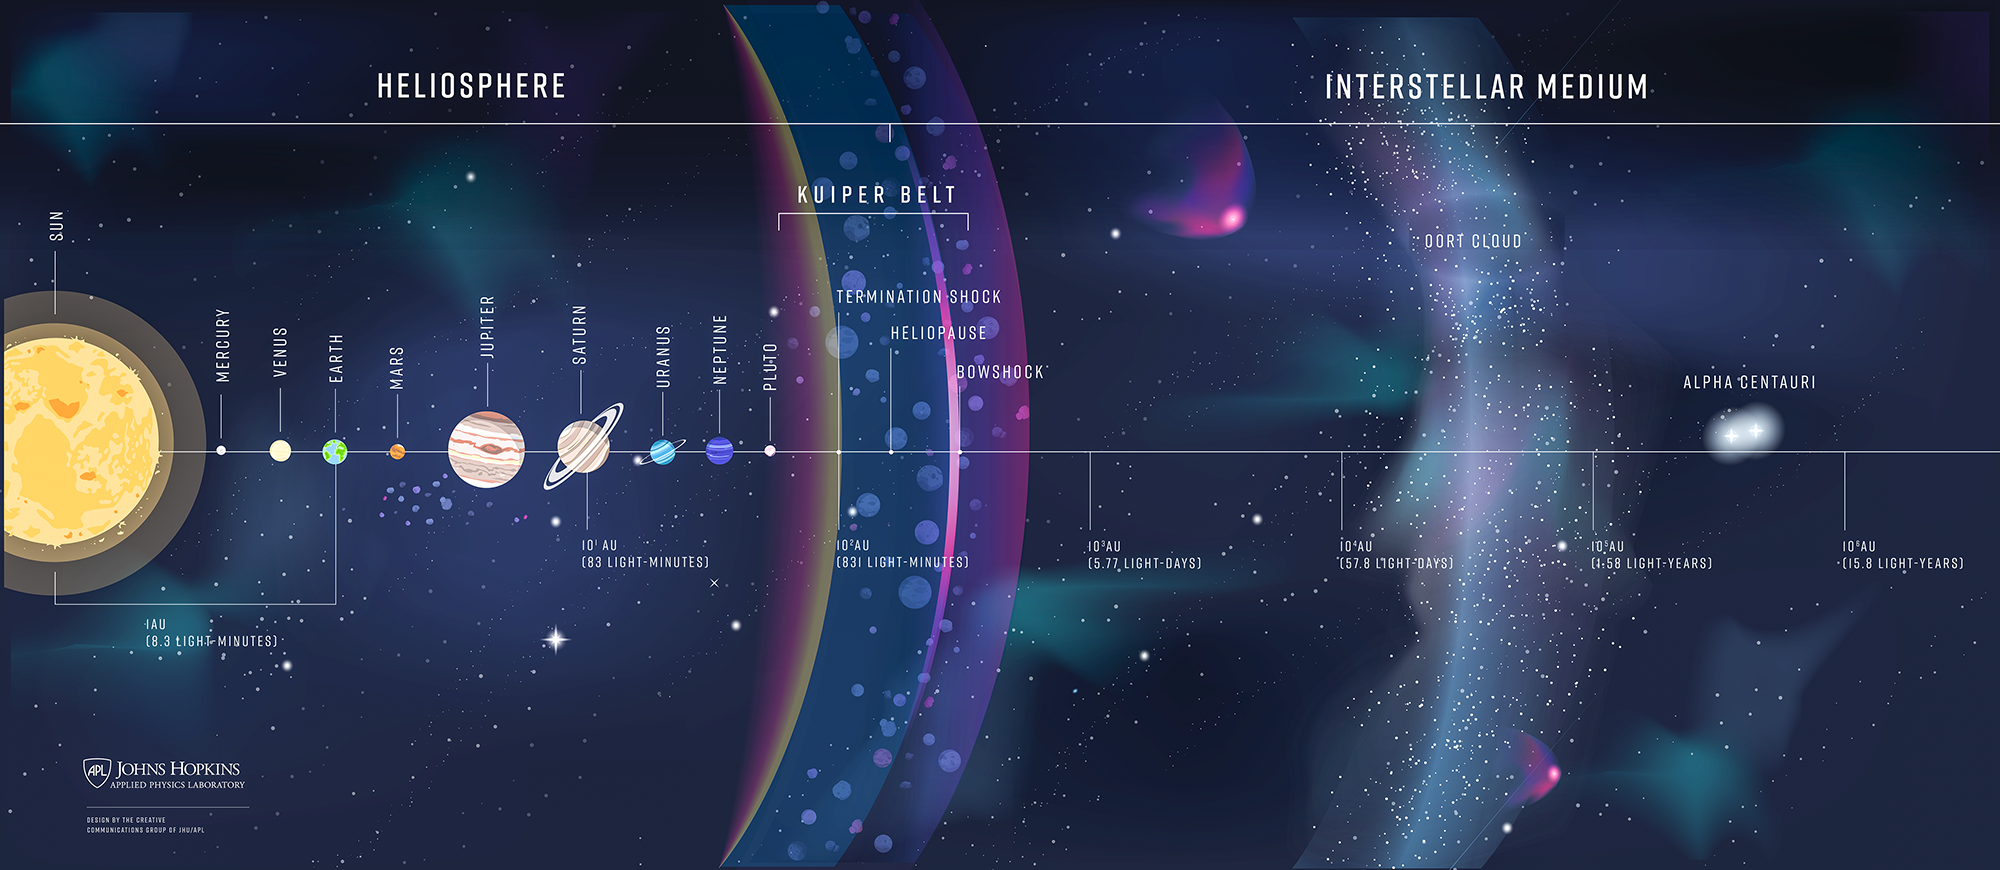 Enlarged view: The journey of Interstellar Probe